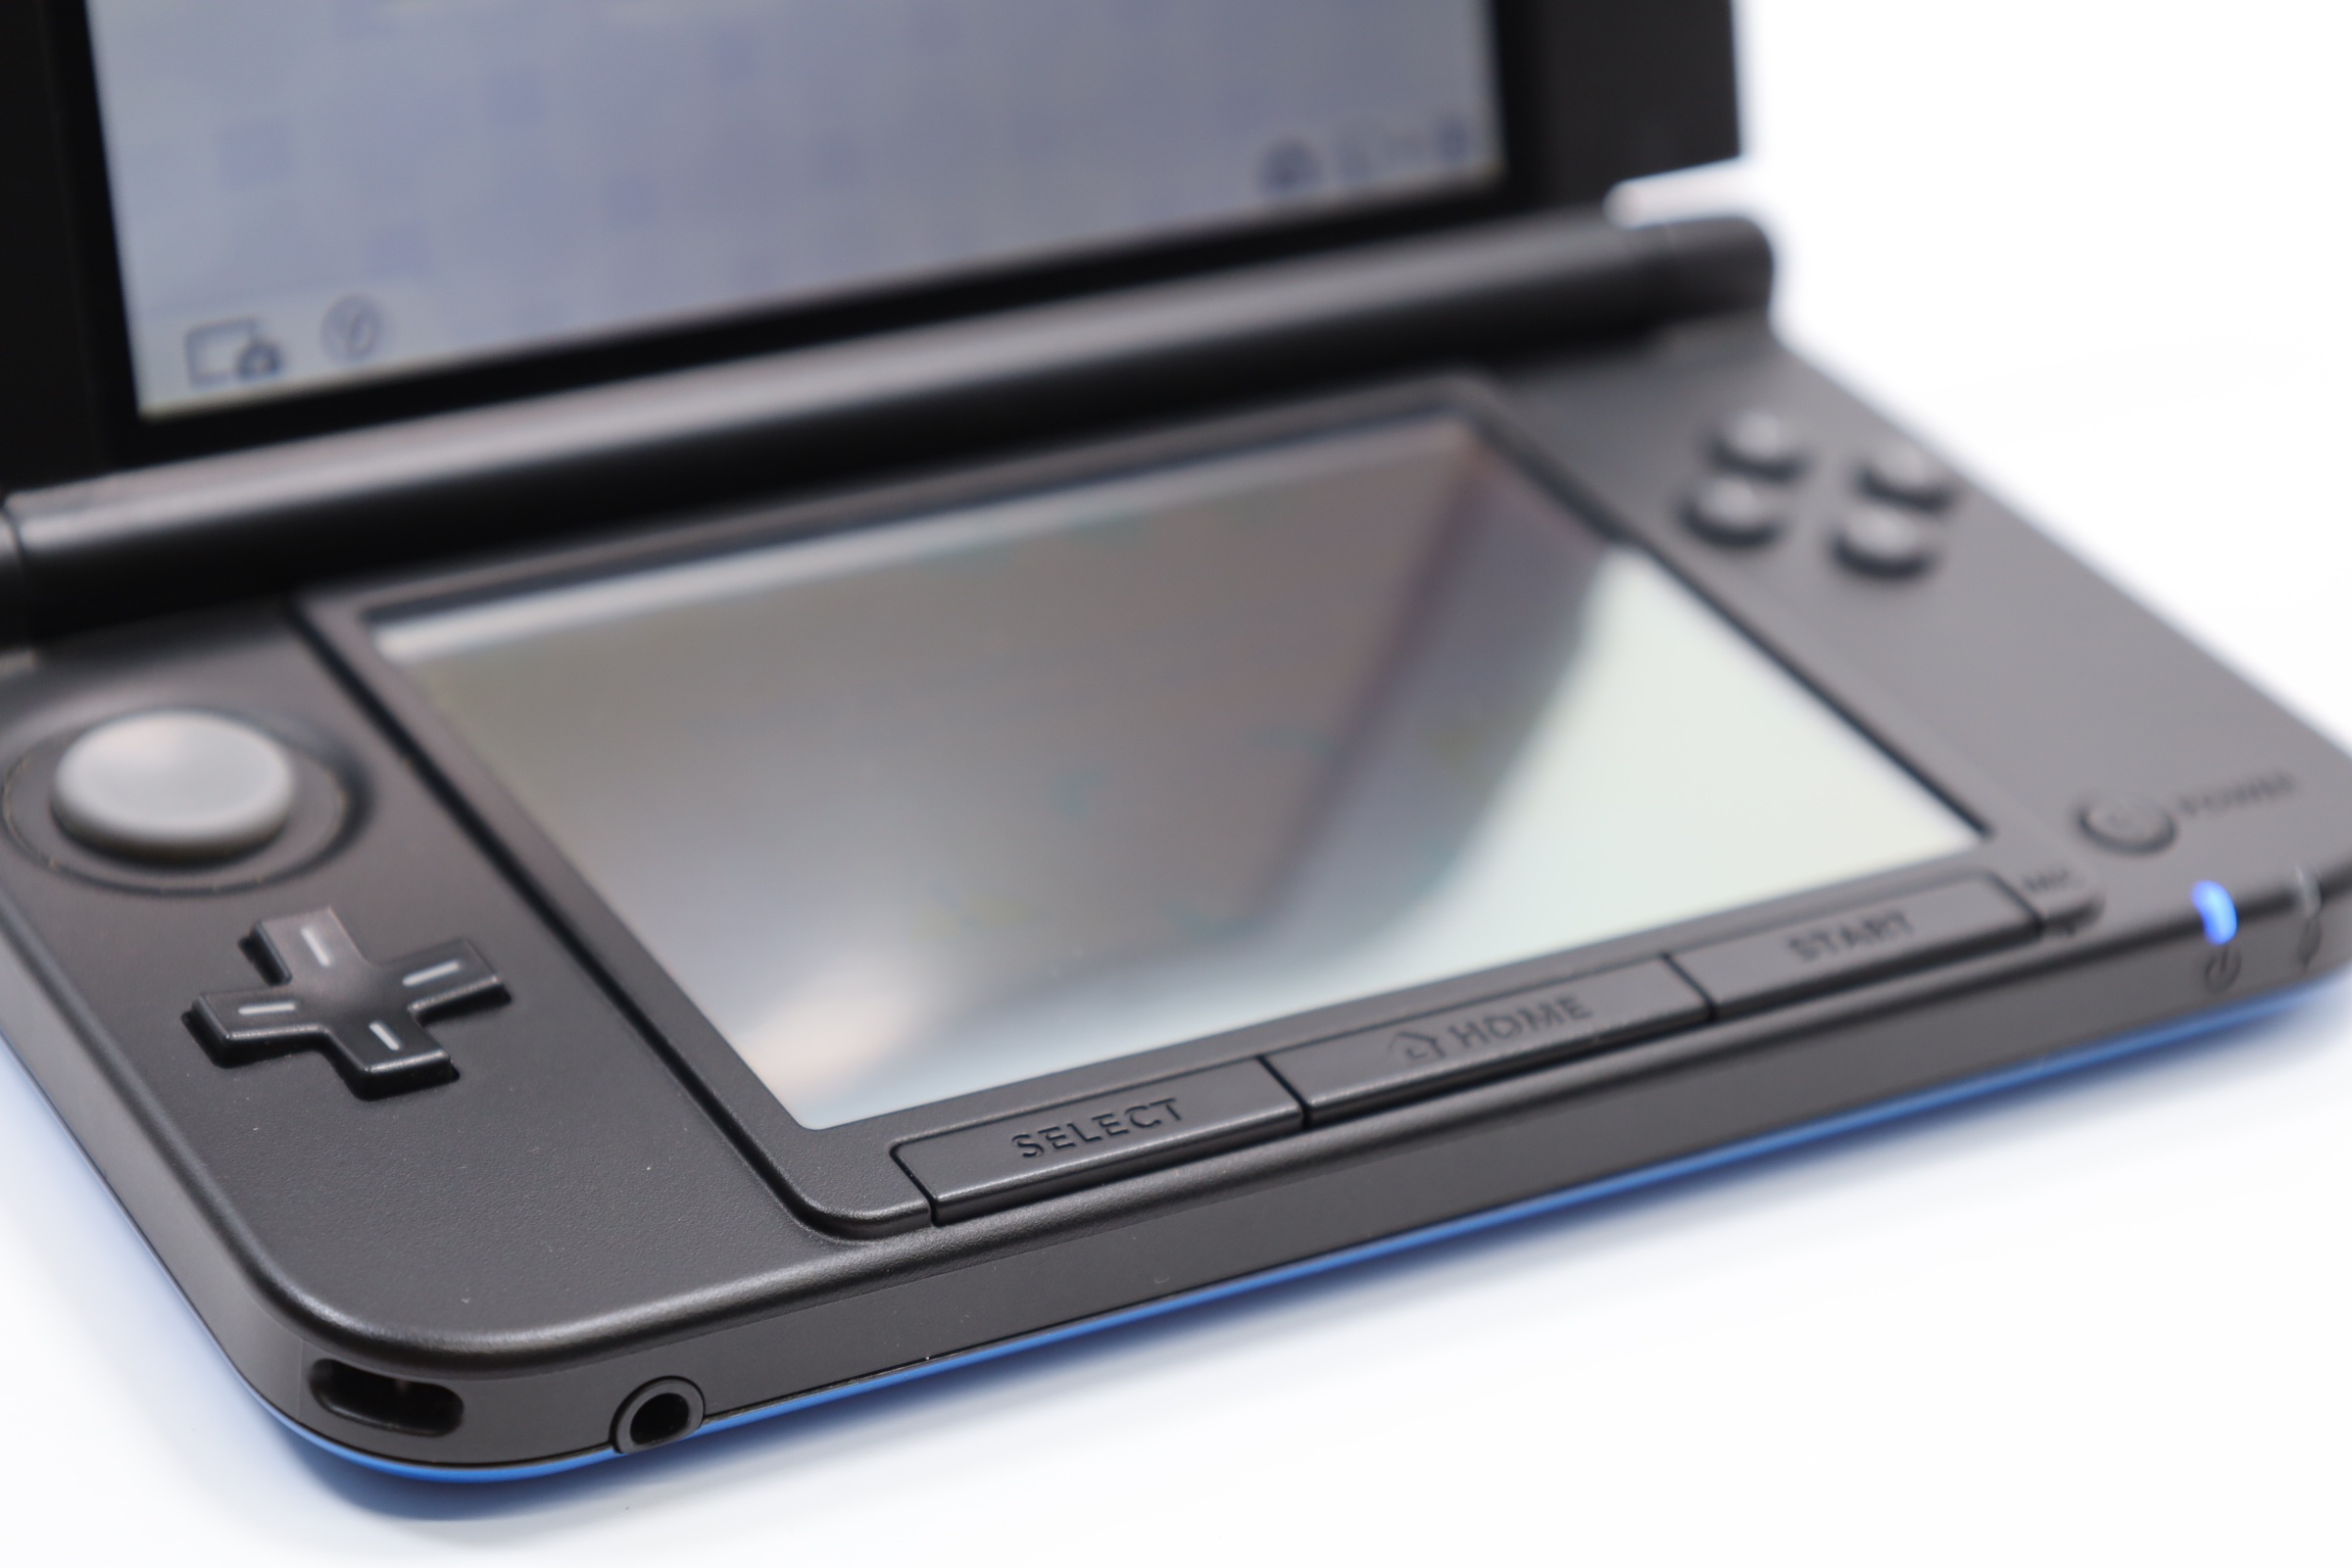 Nintendo 3DS XL SPR-001 3D Dual-Screen Handheld Game System - Blue (55584)